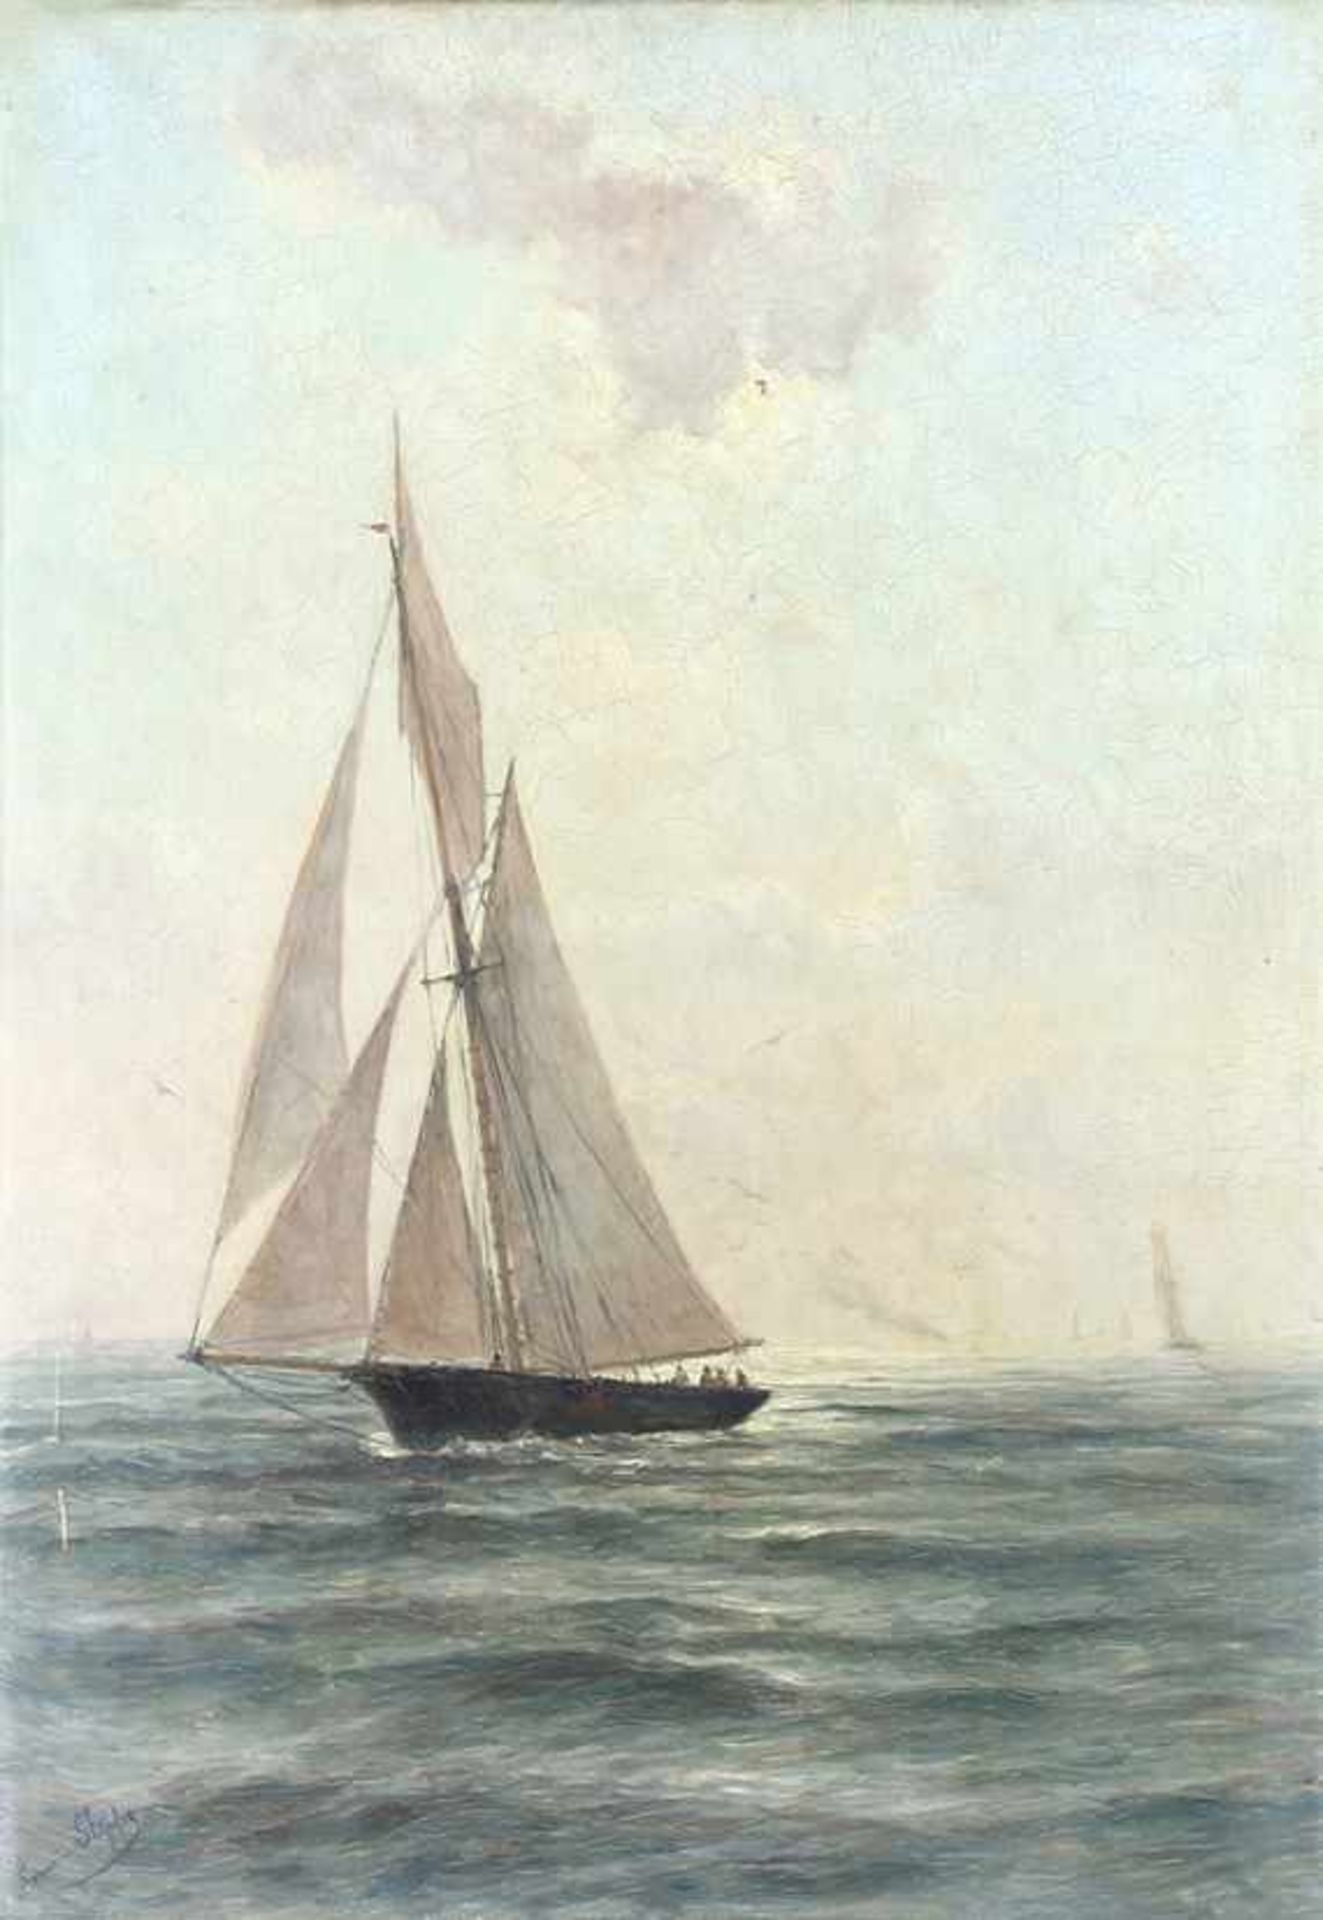 Romain Steppe (1859-1927), 'Le Yacht', L'Esceaux après midi Juin, olieverf op doek, gesigneerd - 100